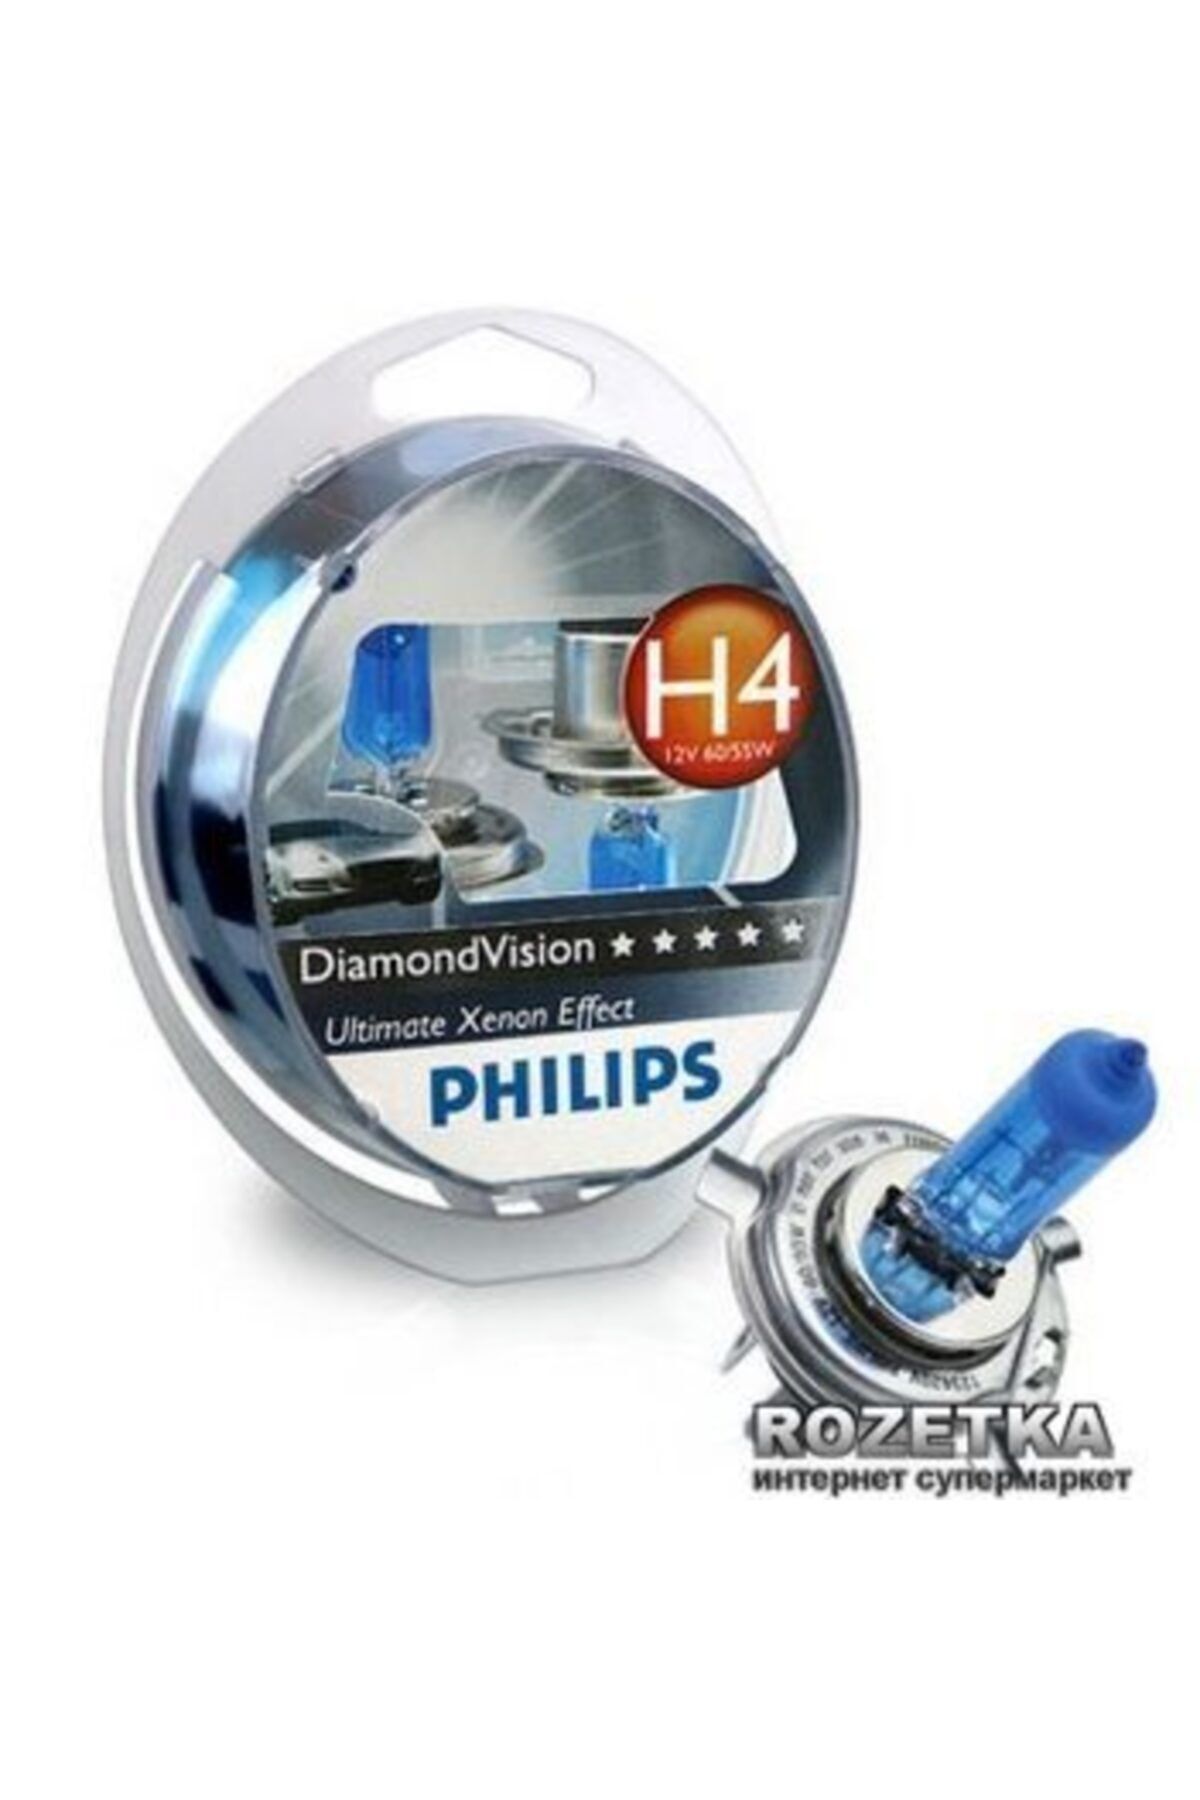 Филипс вижн. Лампы Philips h4 55\60w-12v Diamond Vision 5000k. Philips 12v h4 60/55w Diamond Vision. Philips DIAMONDVISION h4 12v 60/55w 2шт. Лампа автомобильная Philips h4 12v 60/55w 5000k DIAMONDVISION 12342dv.